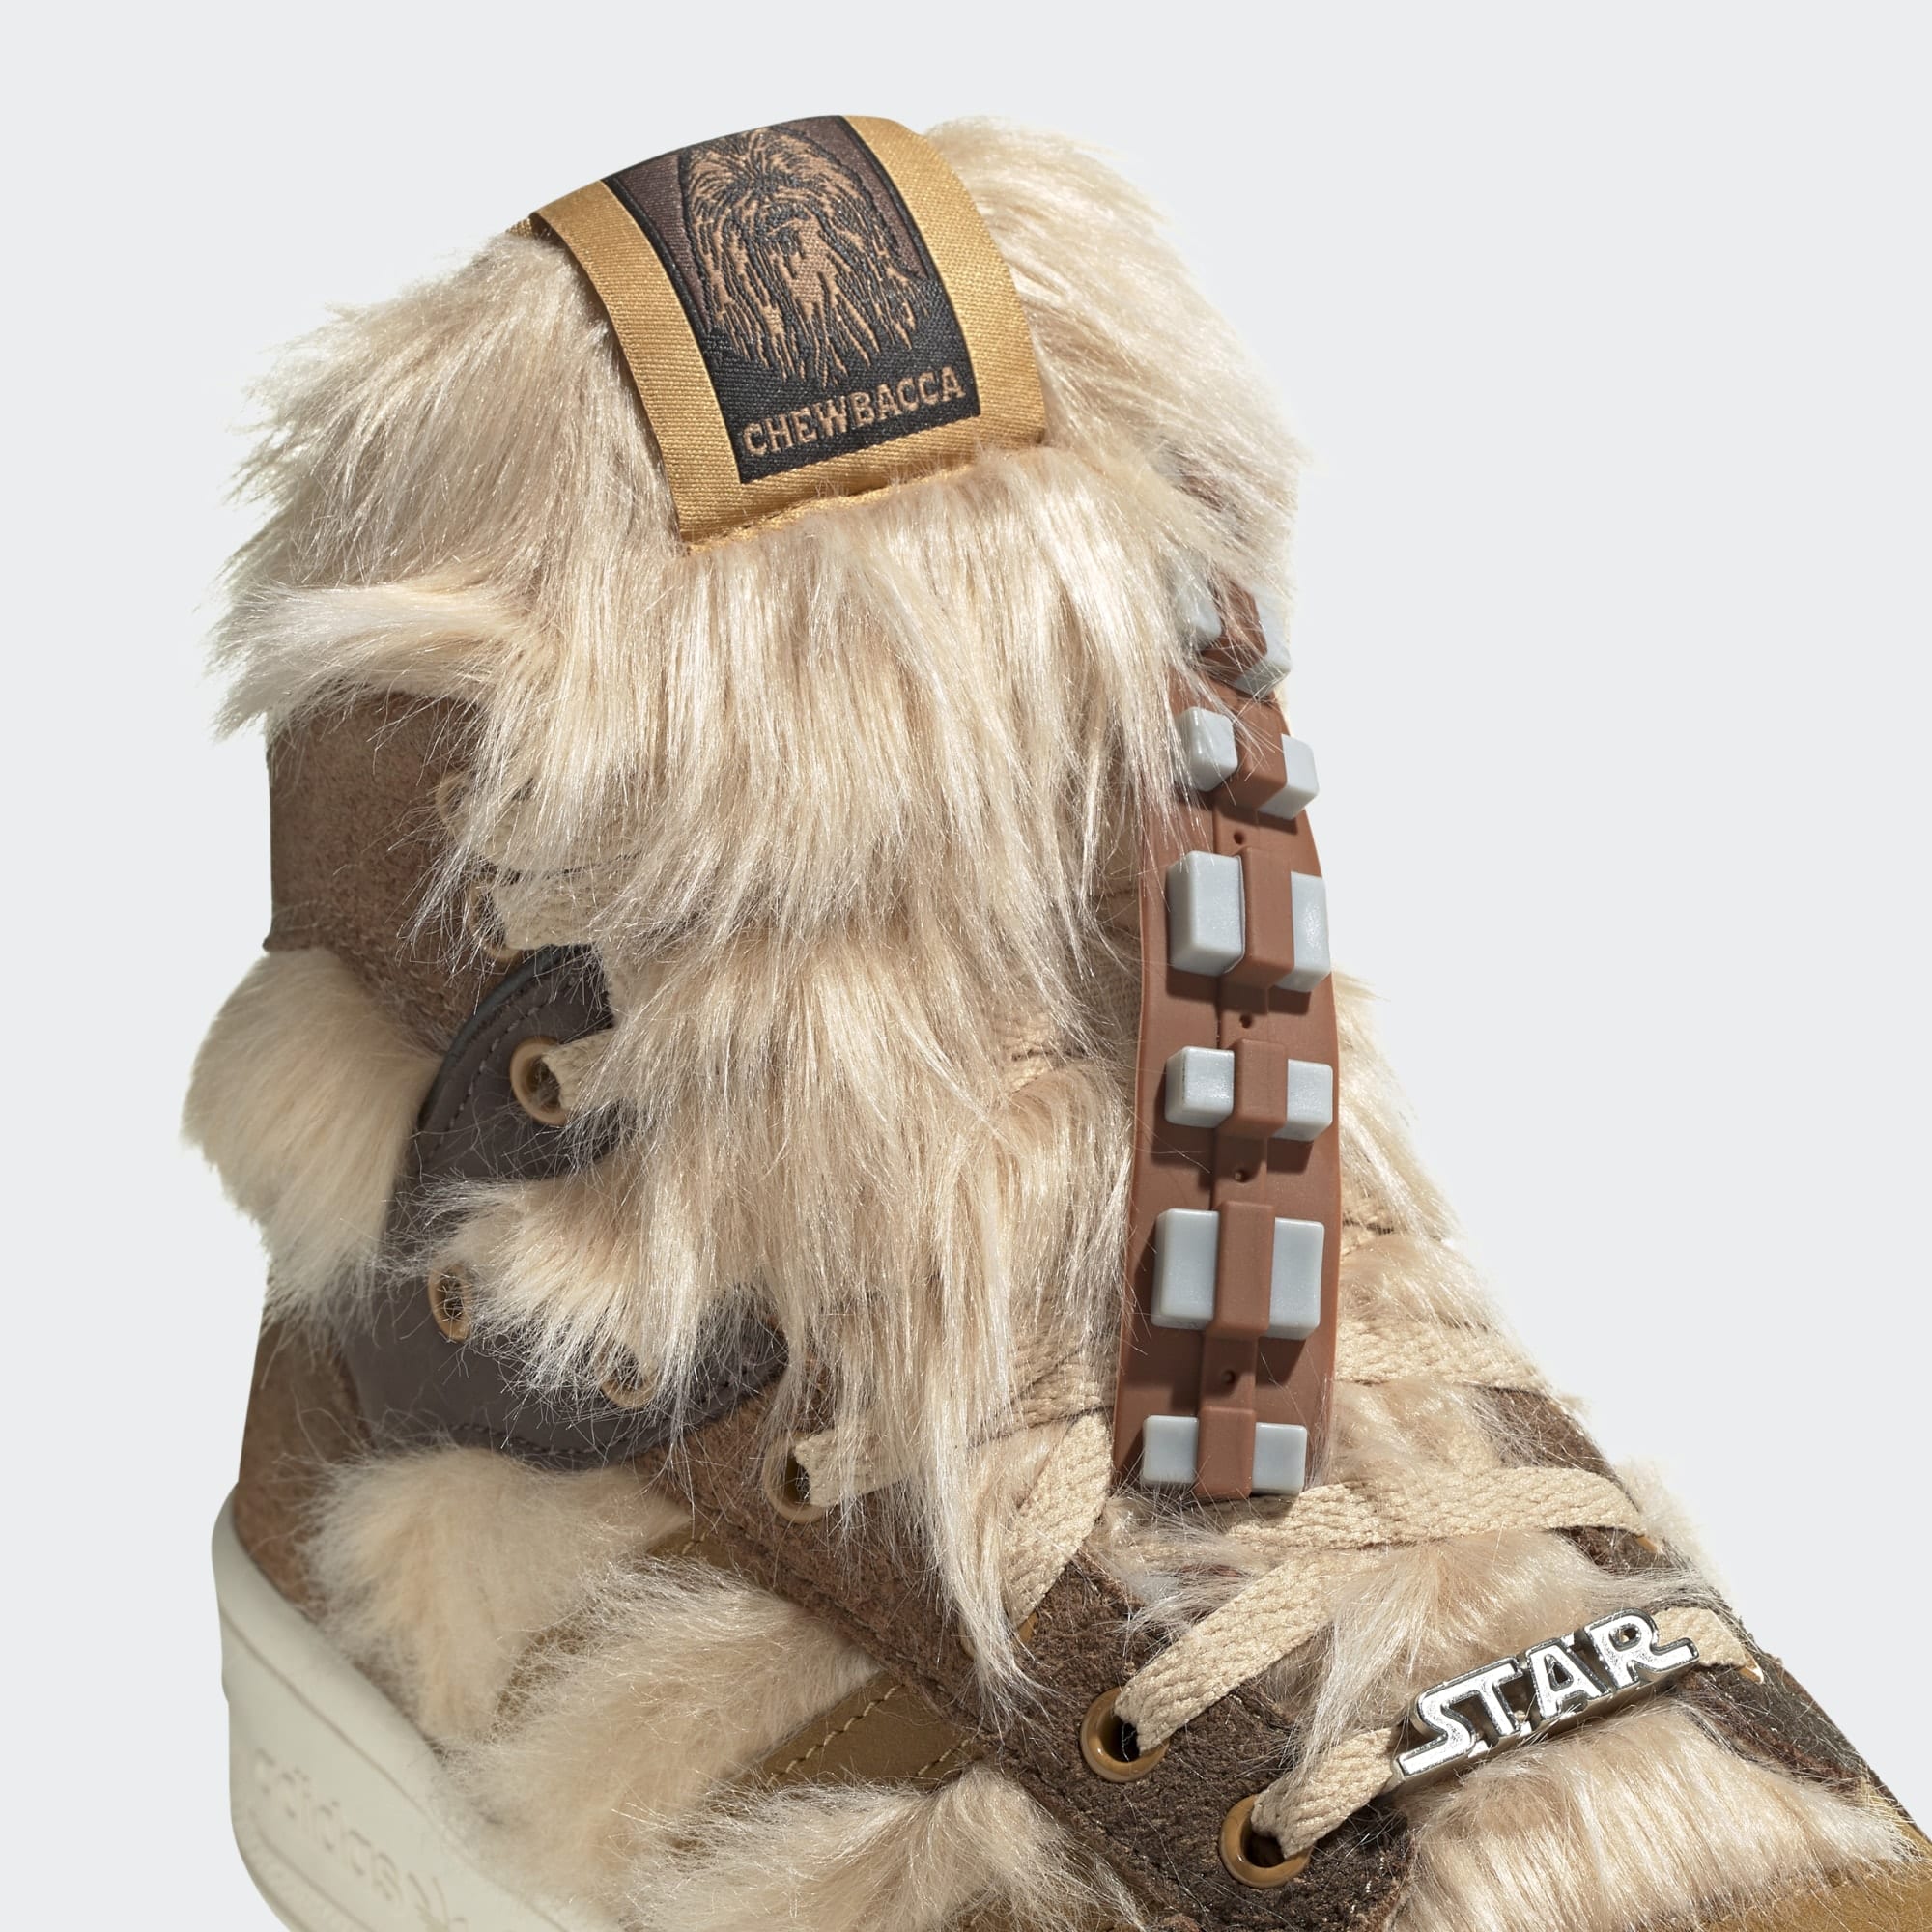 Adidas Rivalry Hi Star Wars Chewbacca in arrivo il 22 ottobre | Lega Nerd